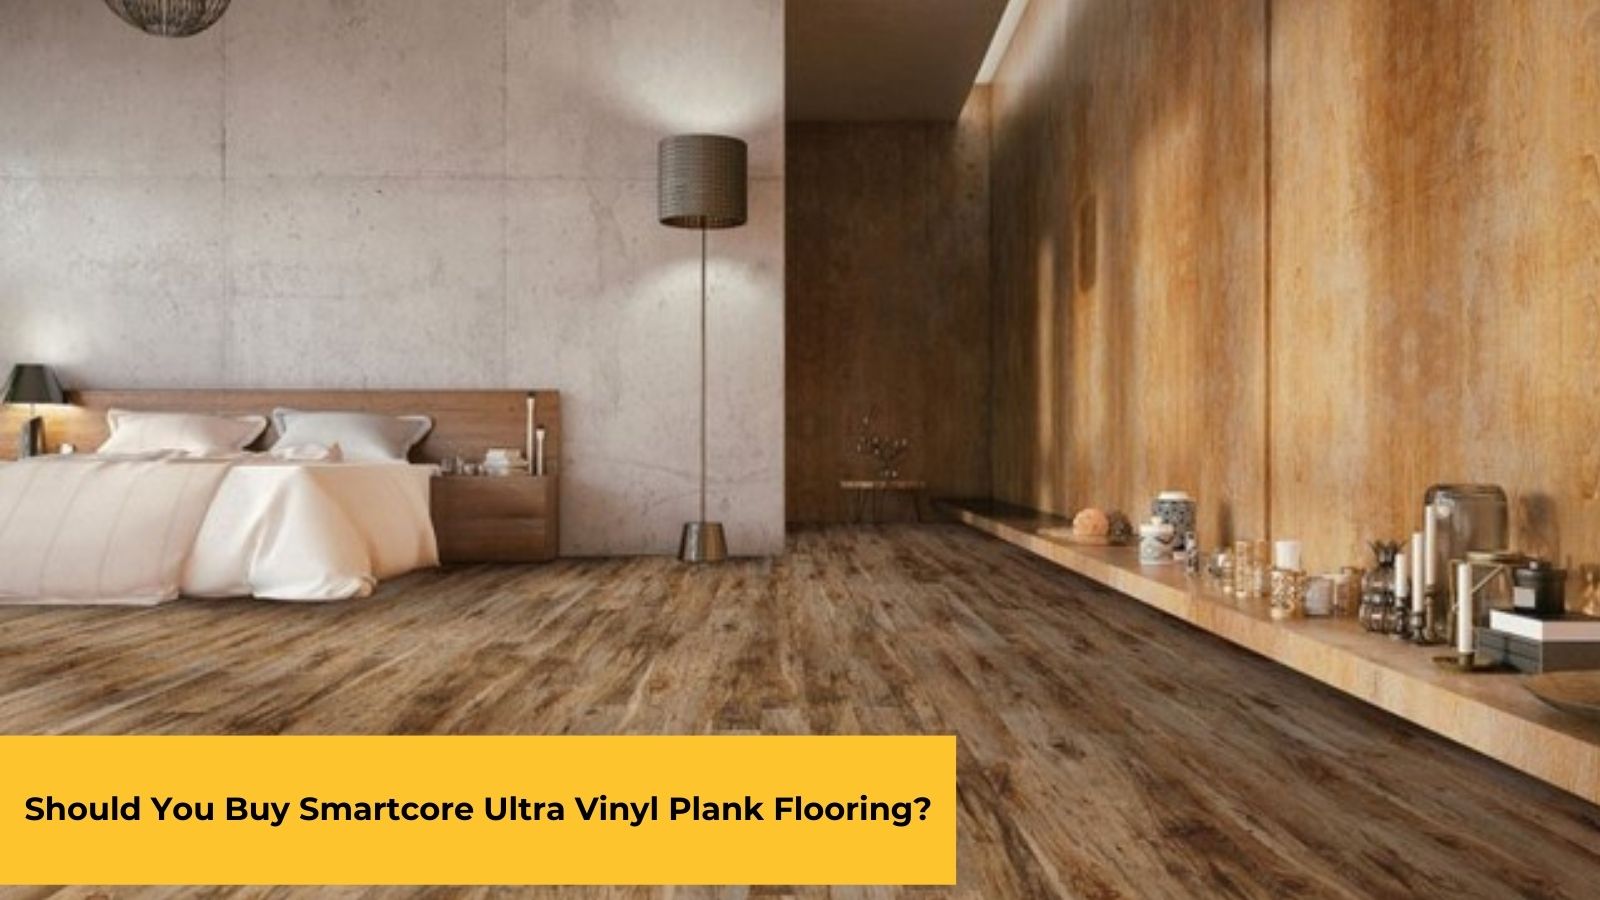 Should You Buy Smartcore Ultra Vinyl Plank Flooring featured image